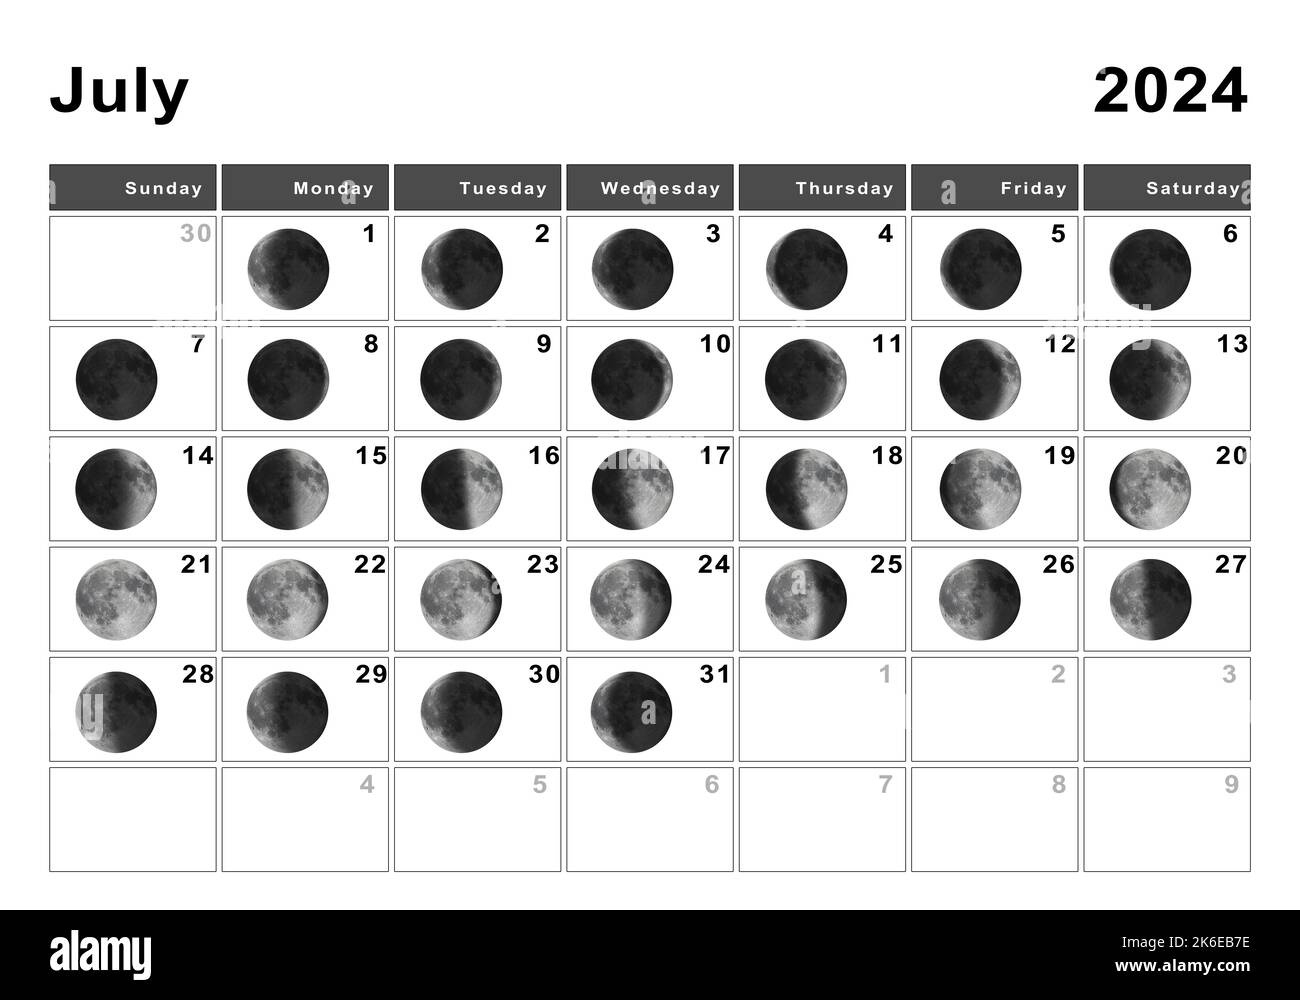 July 2024 Lunar Calendar, Moon Cycles, Moon Phases Stock Photo - Alamy regarding July Moon Phases Calendar 2024